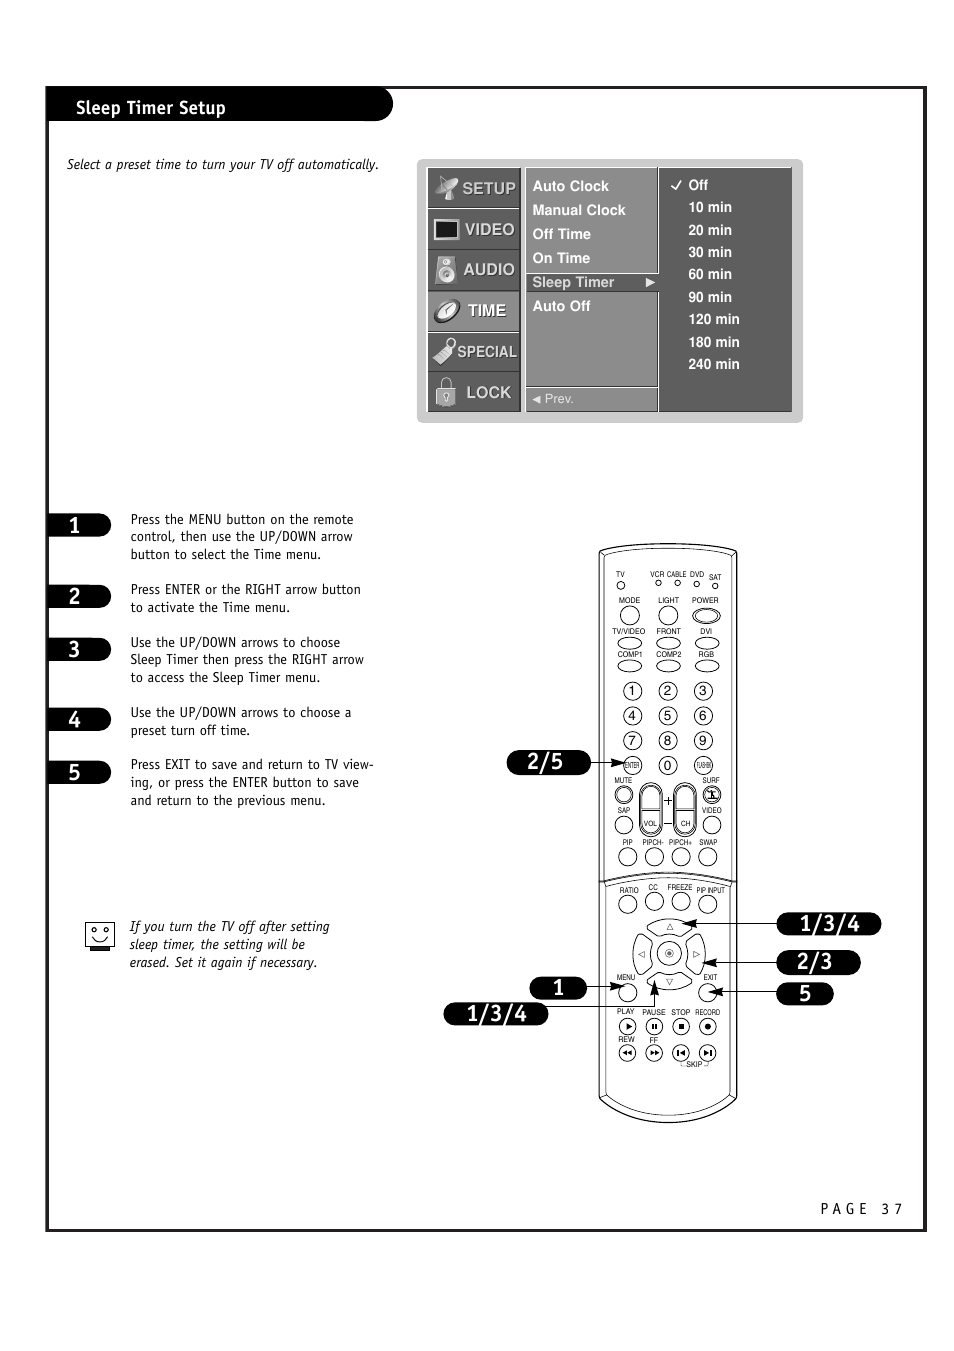 Sleep timer setup | LG RU-52SZ61D User Manual | Page 37 / 60